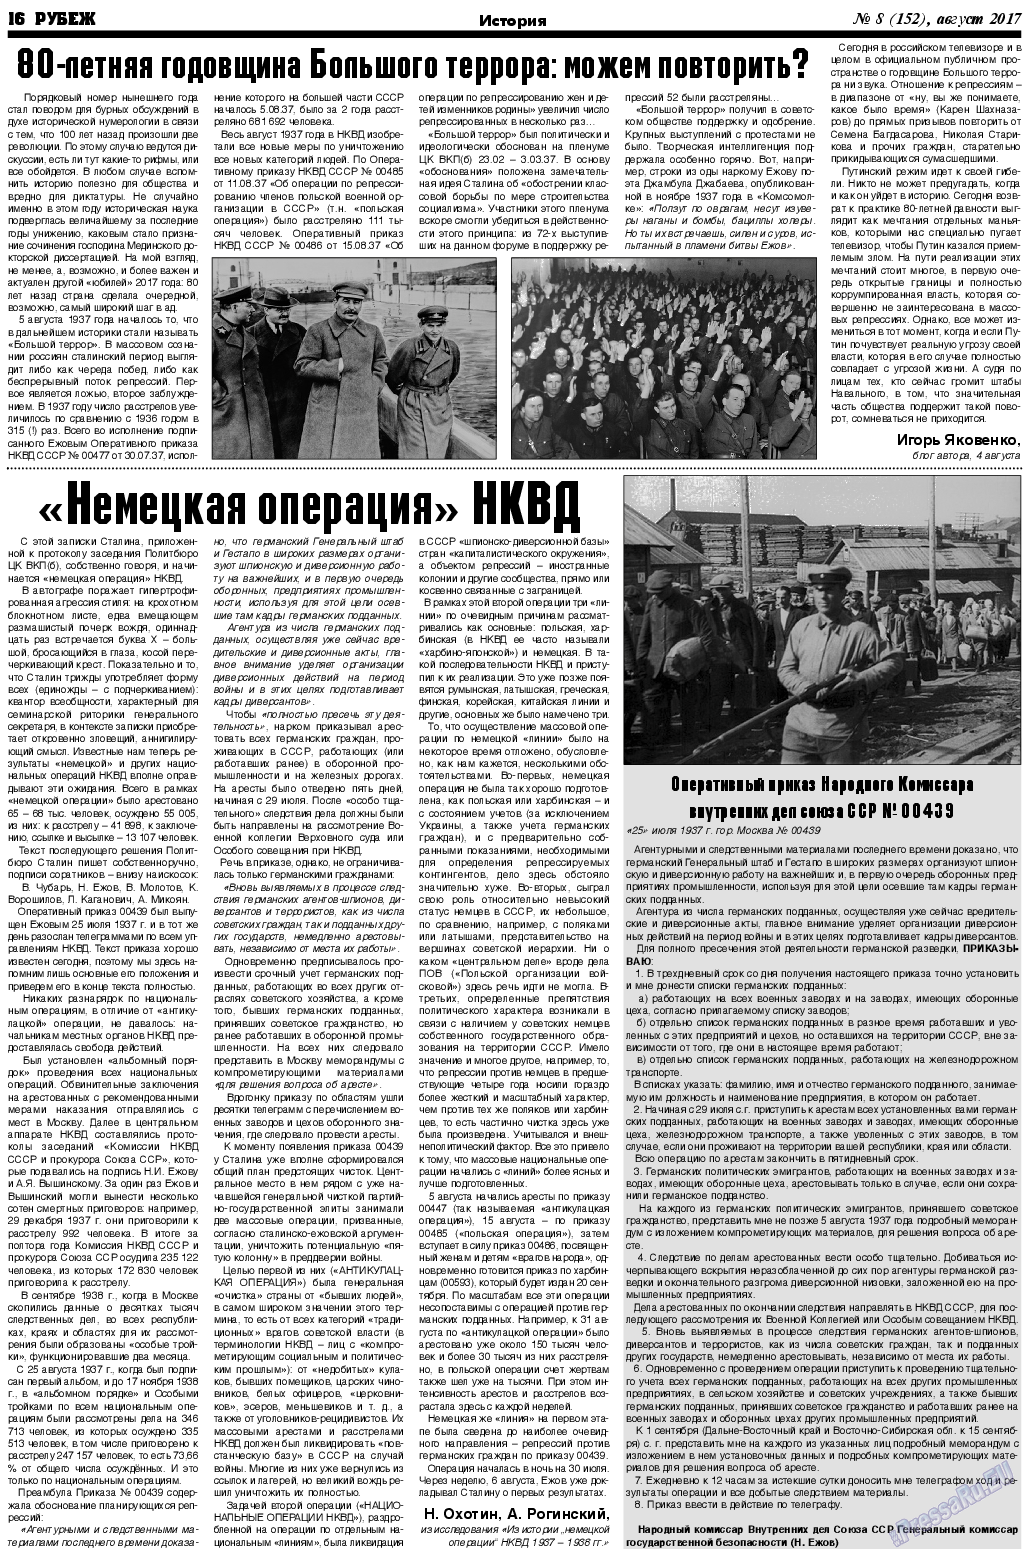 Рубеж, газета. 2017 №8 стр.16